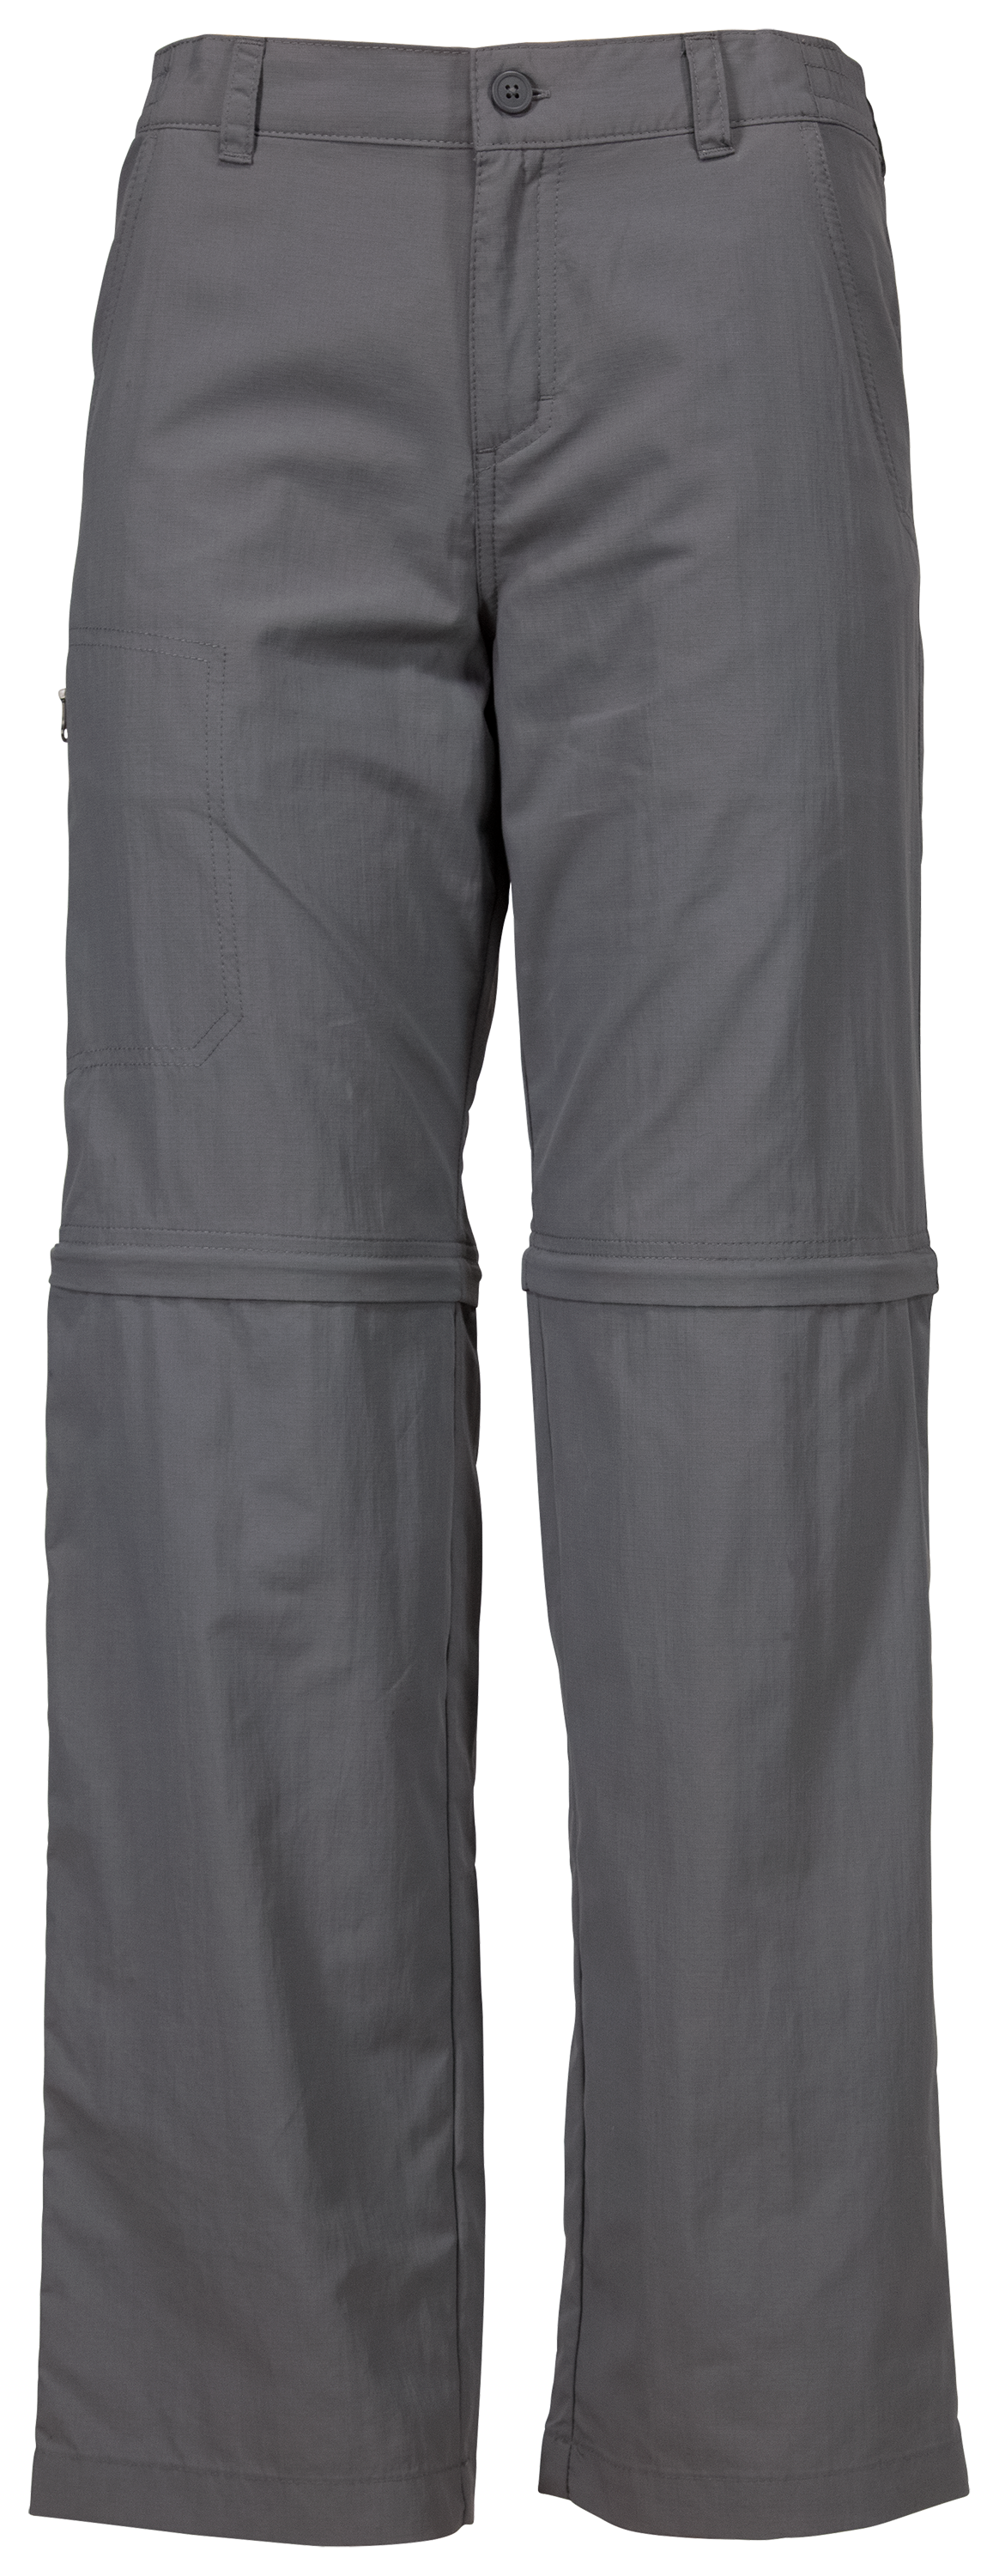 Columbia Silver Ridge IV Convertible Pants for Boys - City Grey - L